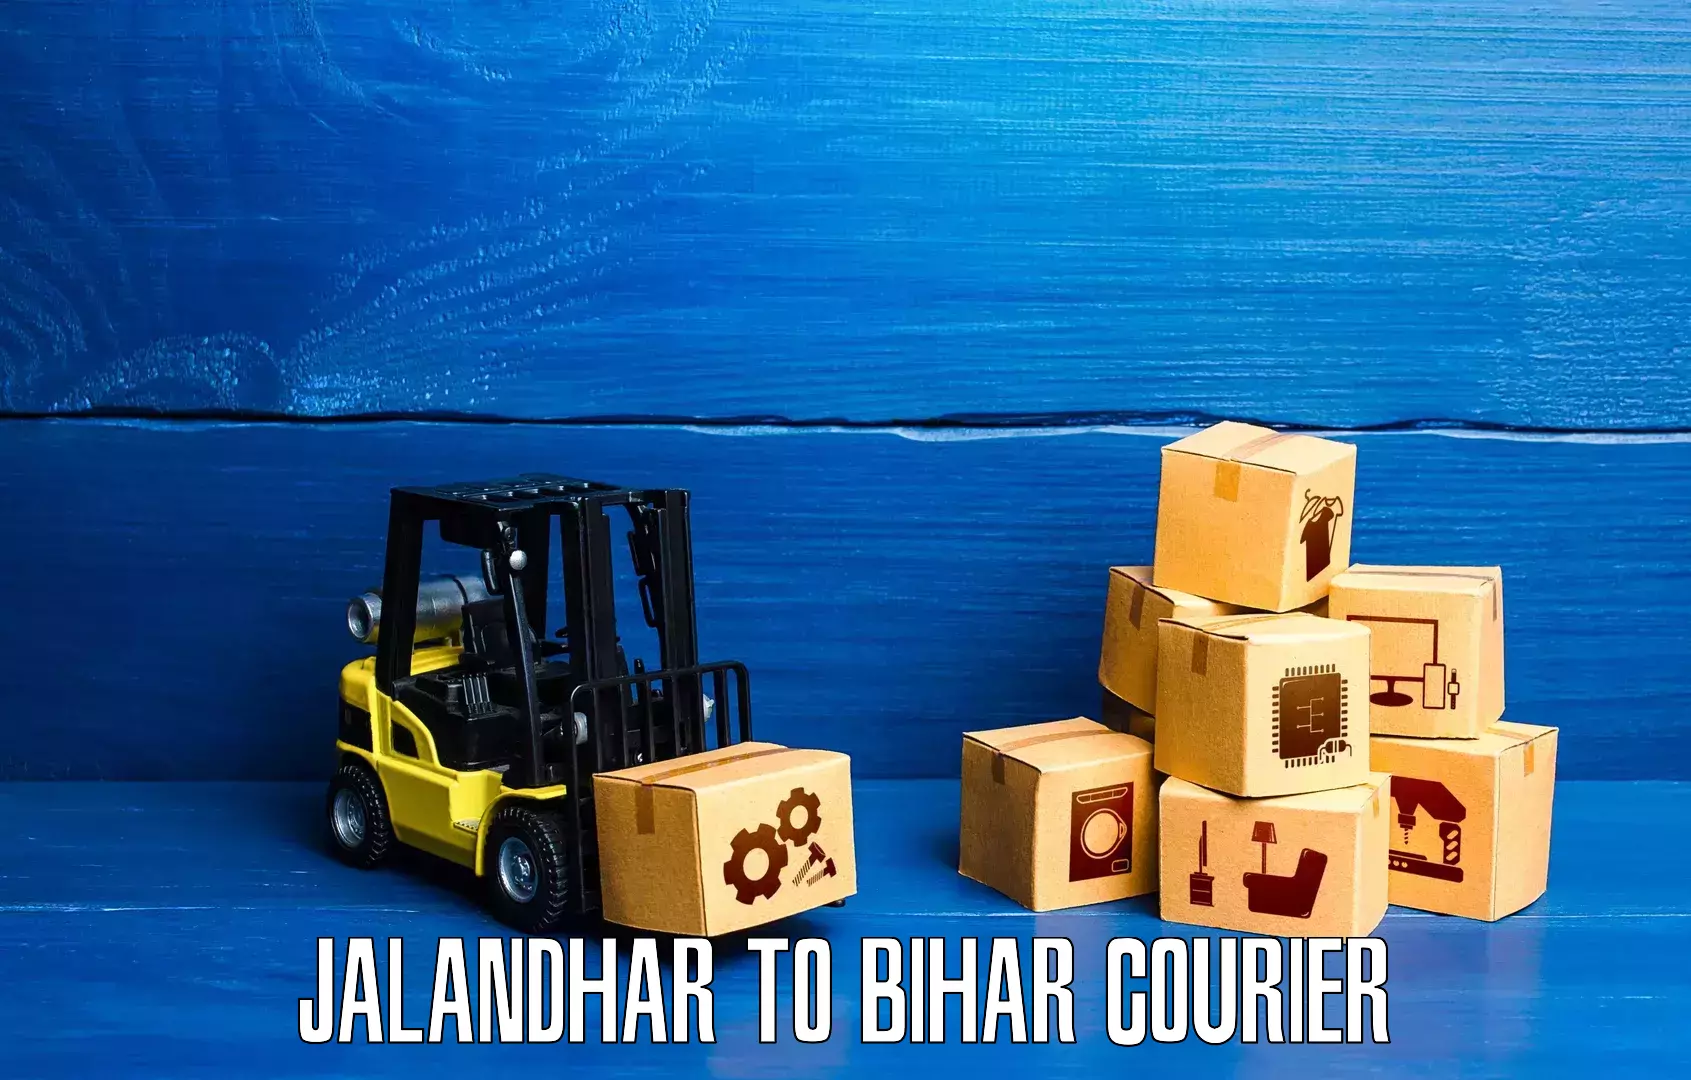 Global shipping networks Jalandhar to Vaishali